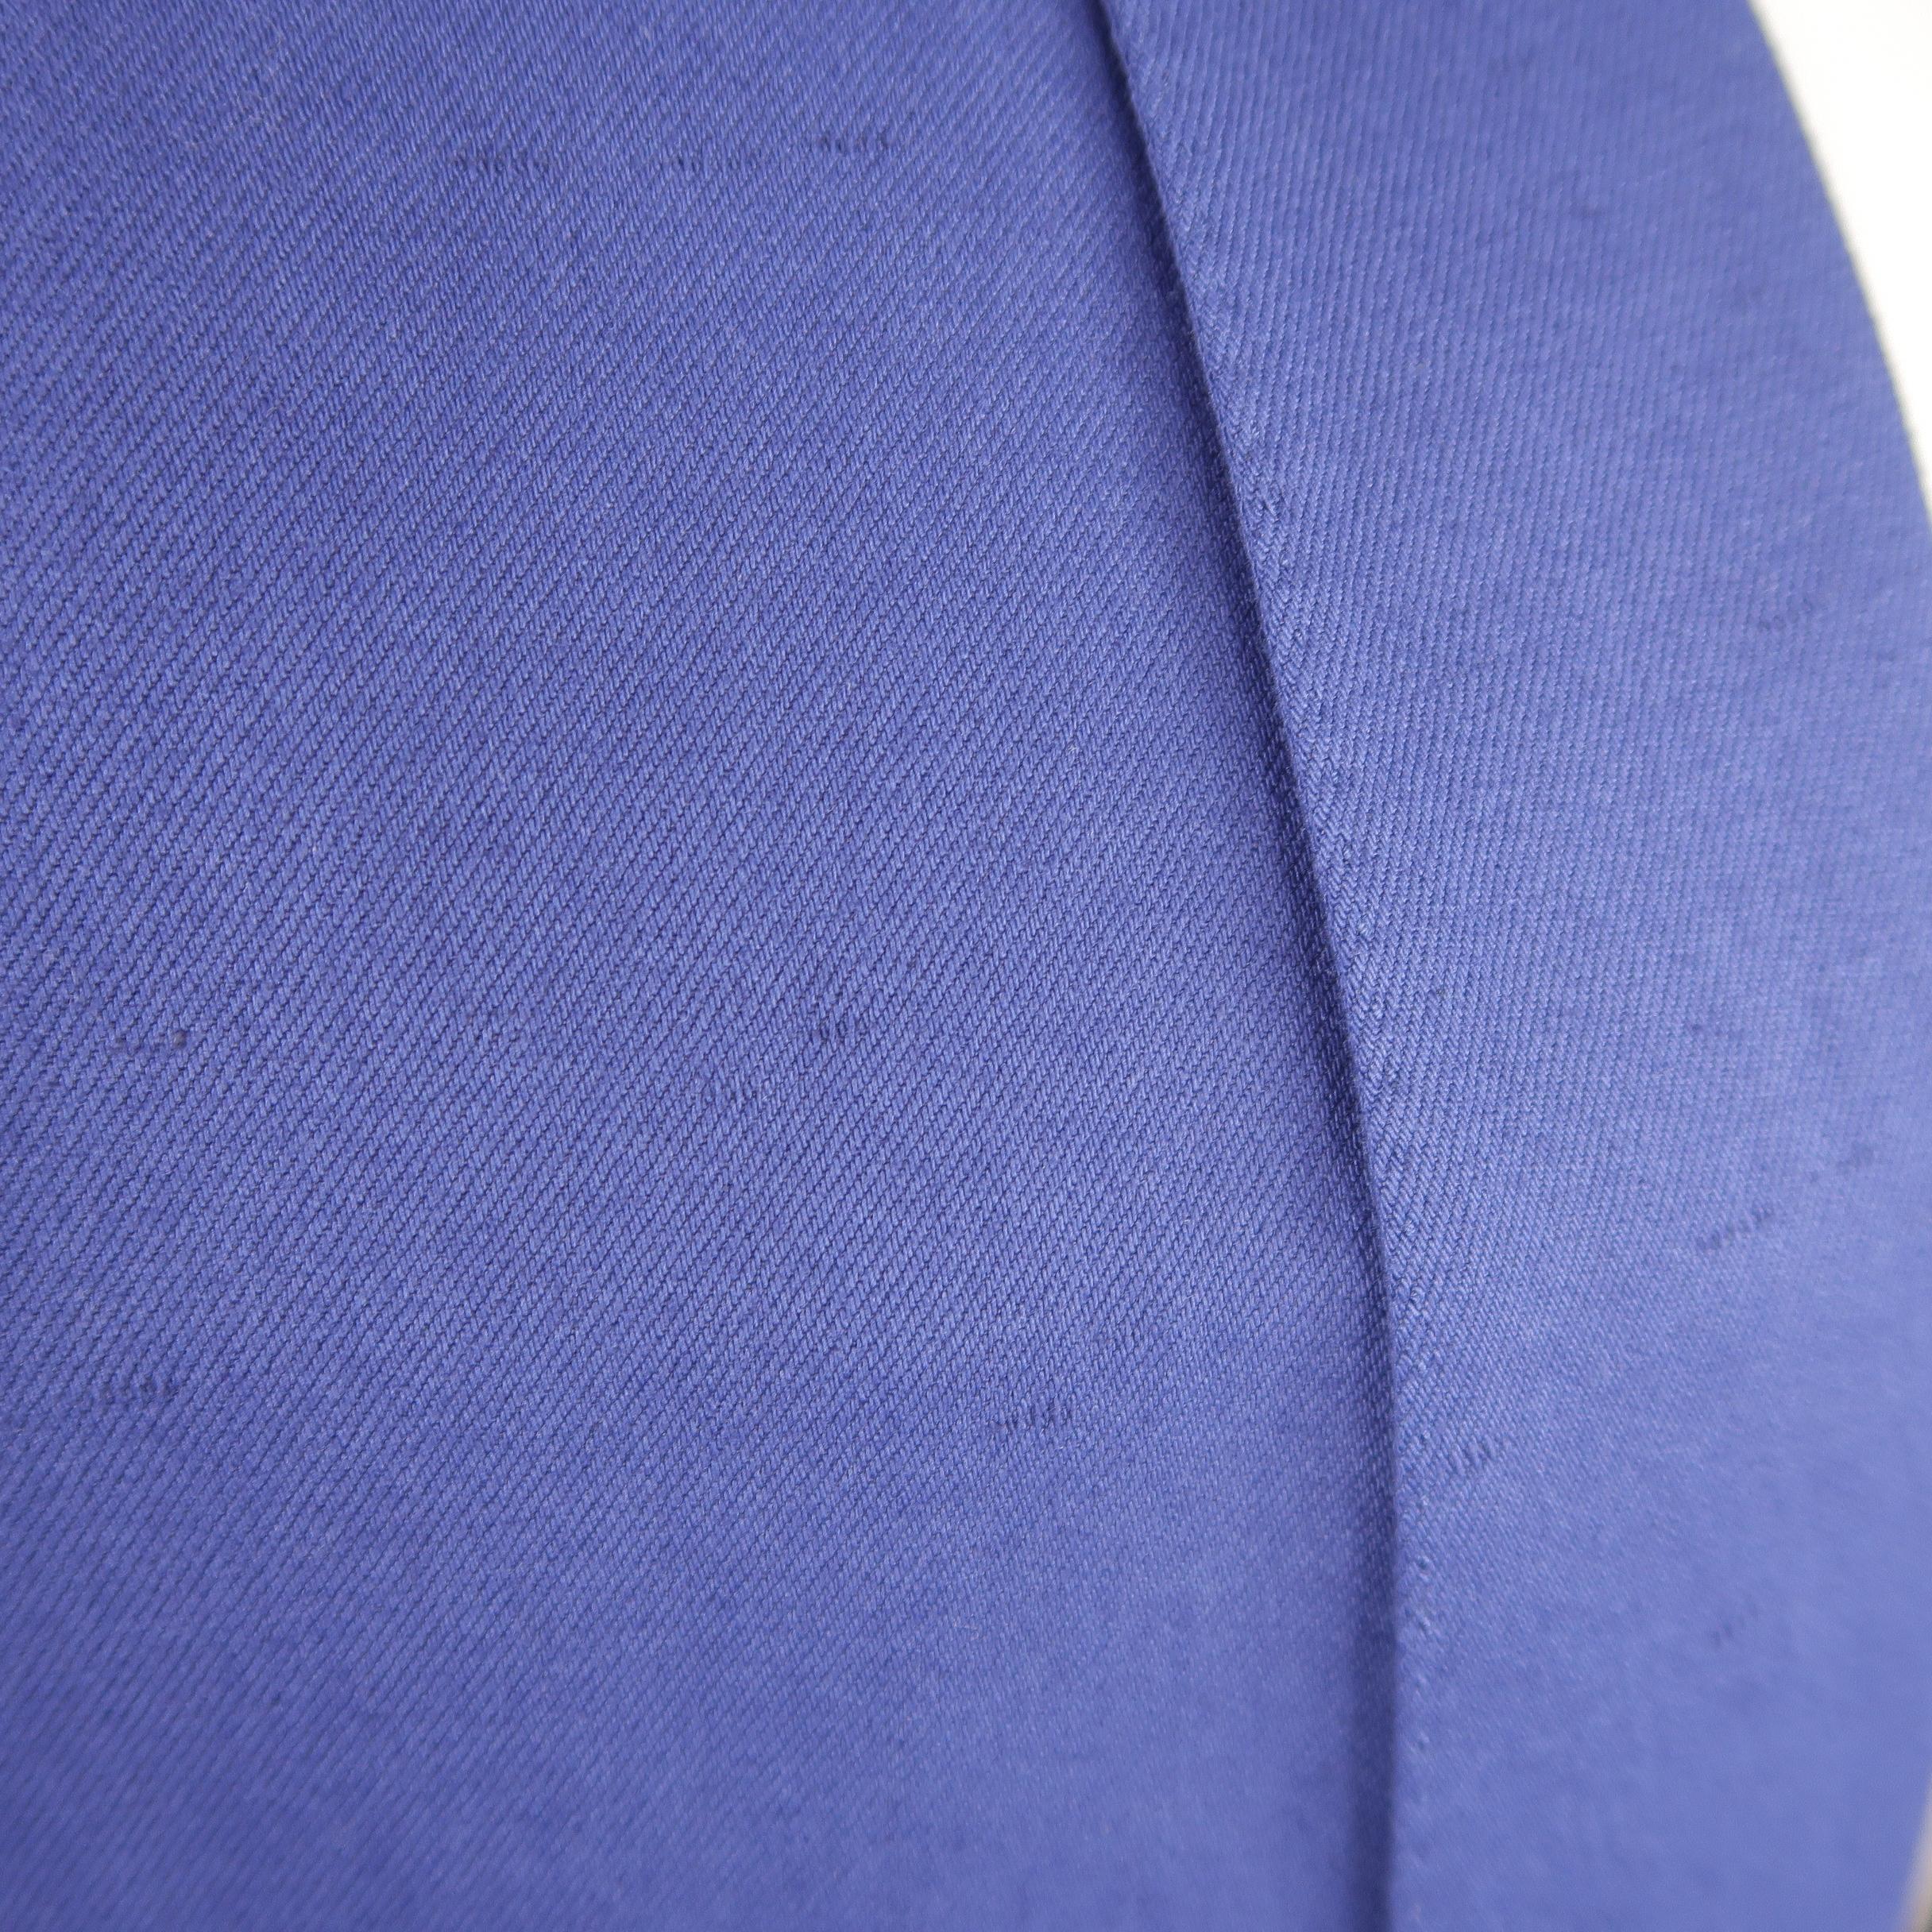 Men's 3.1 Phillip Lim Blue Cotton / Linen Shawl Collar Jacket / Sport Coat